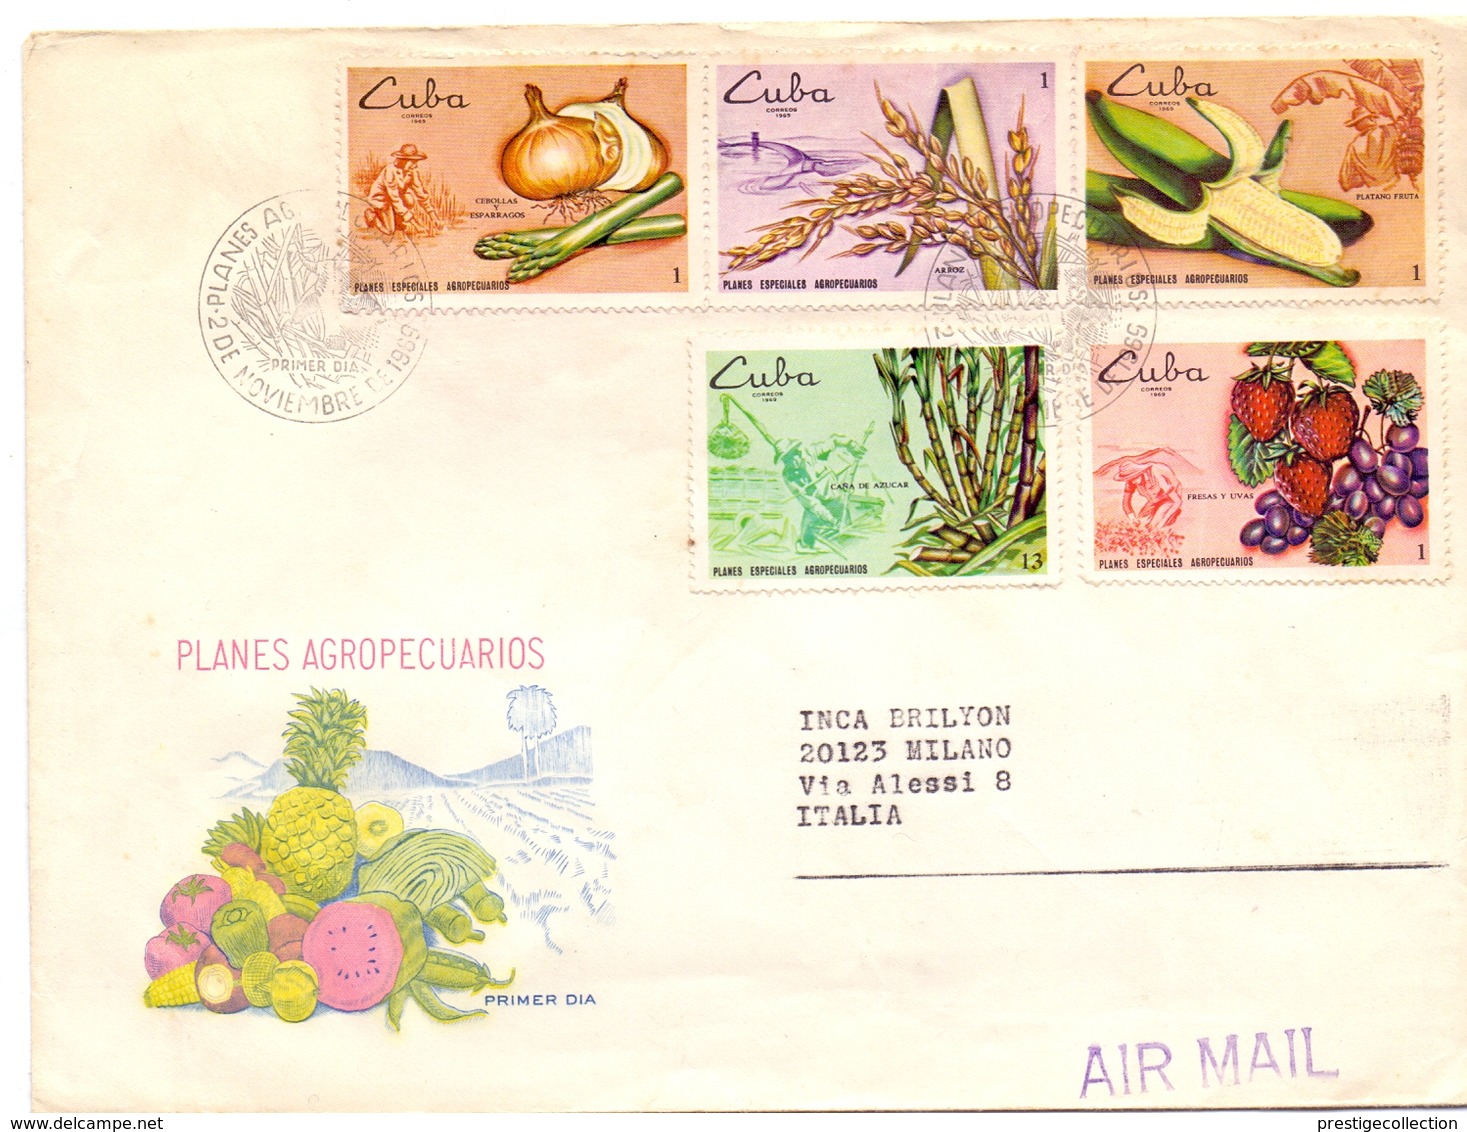 CUBA FDC VEGETABLES  AIR MAIL MAXI FORMAT. COVER    (NOV180018) - Agricultura